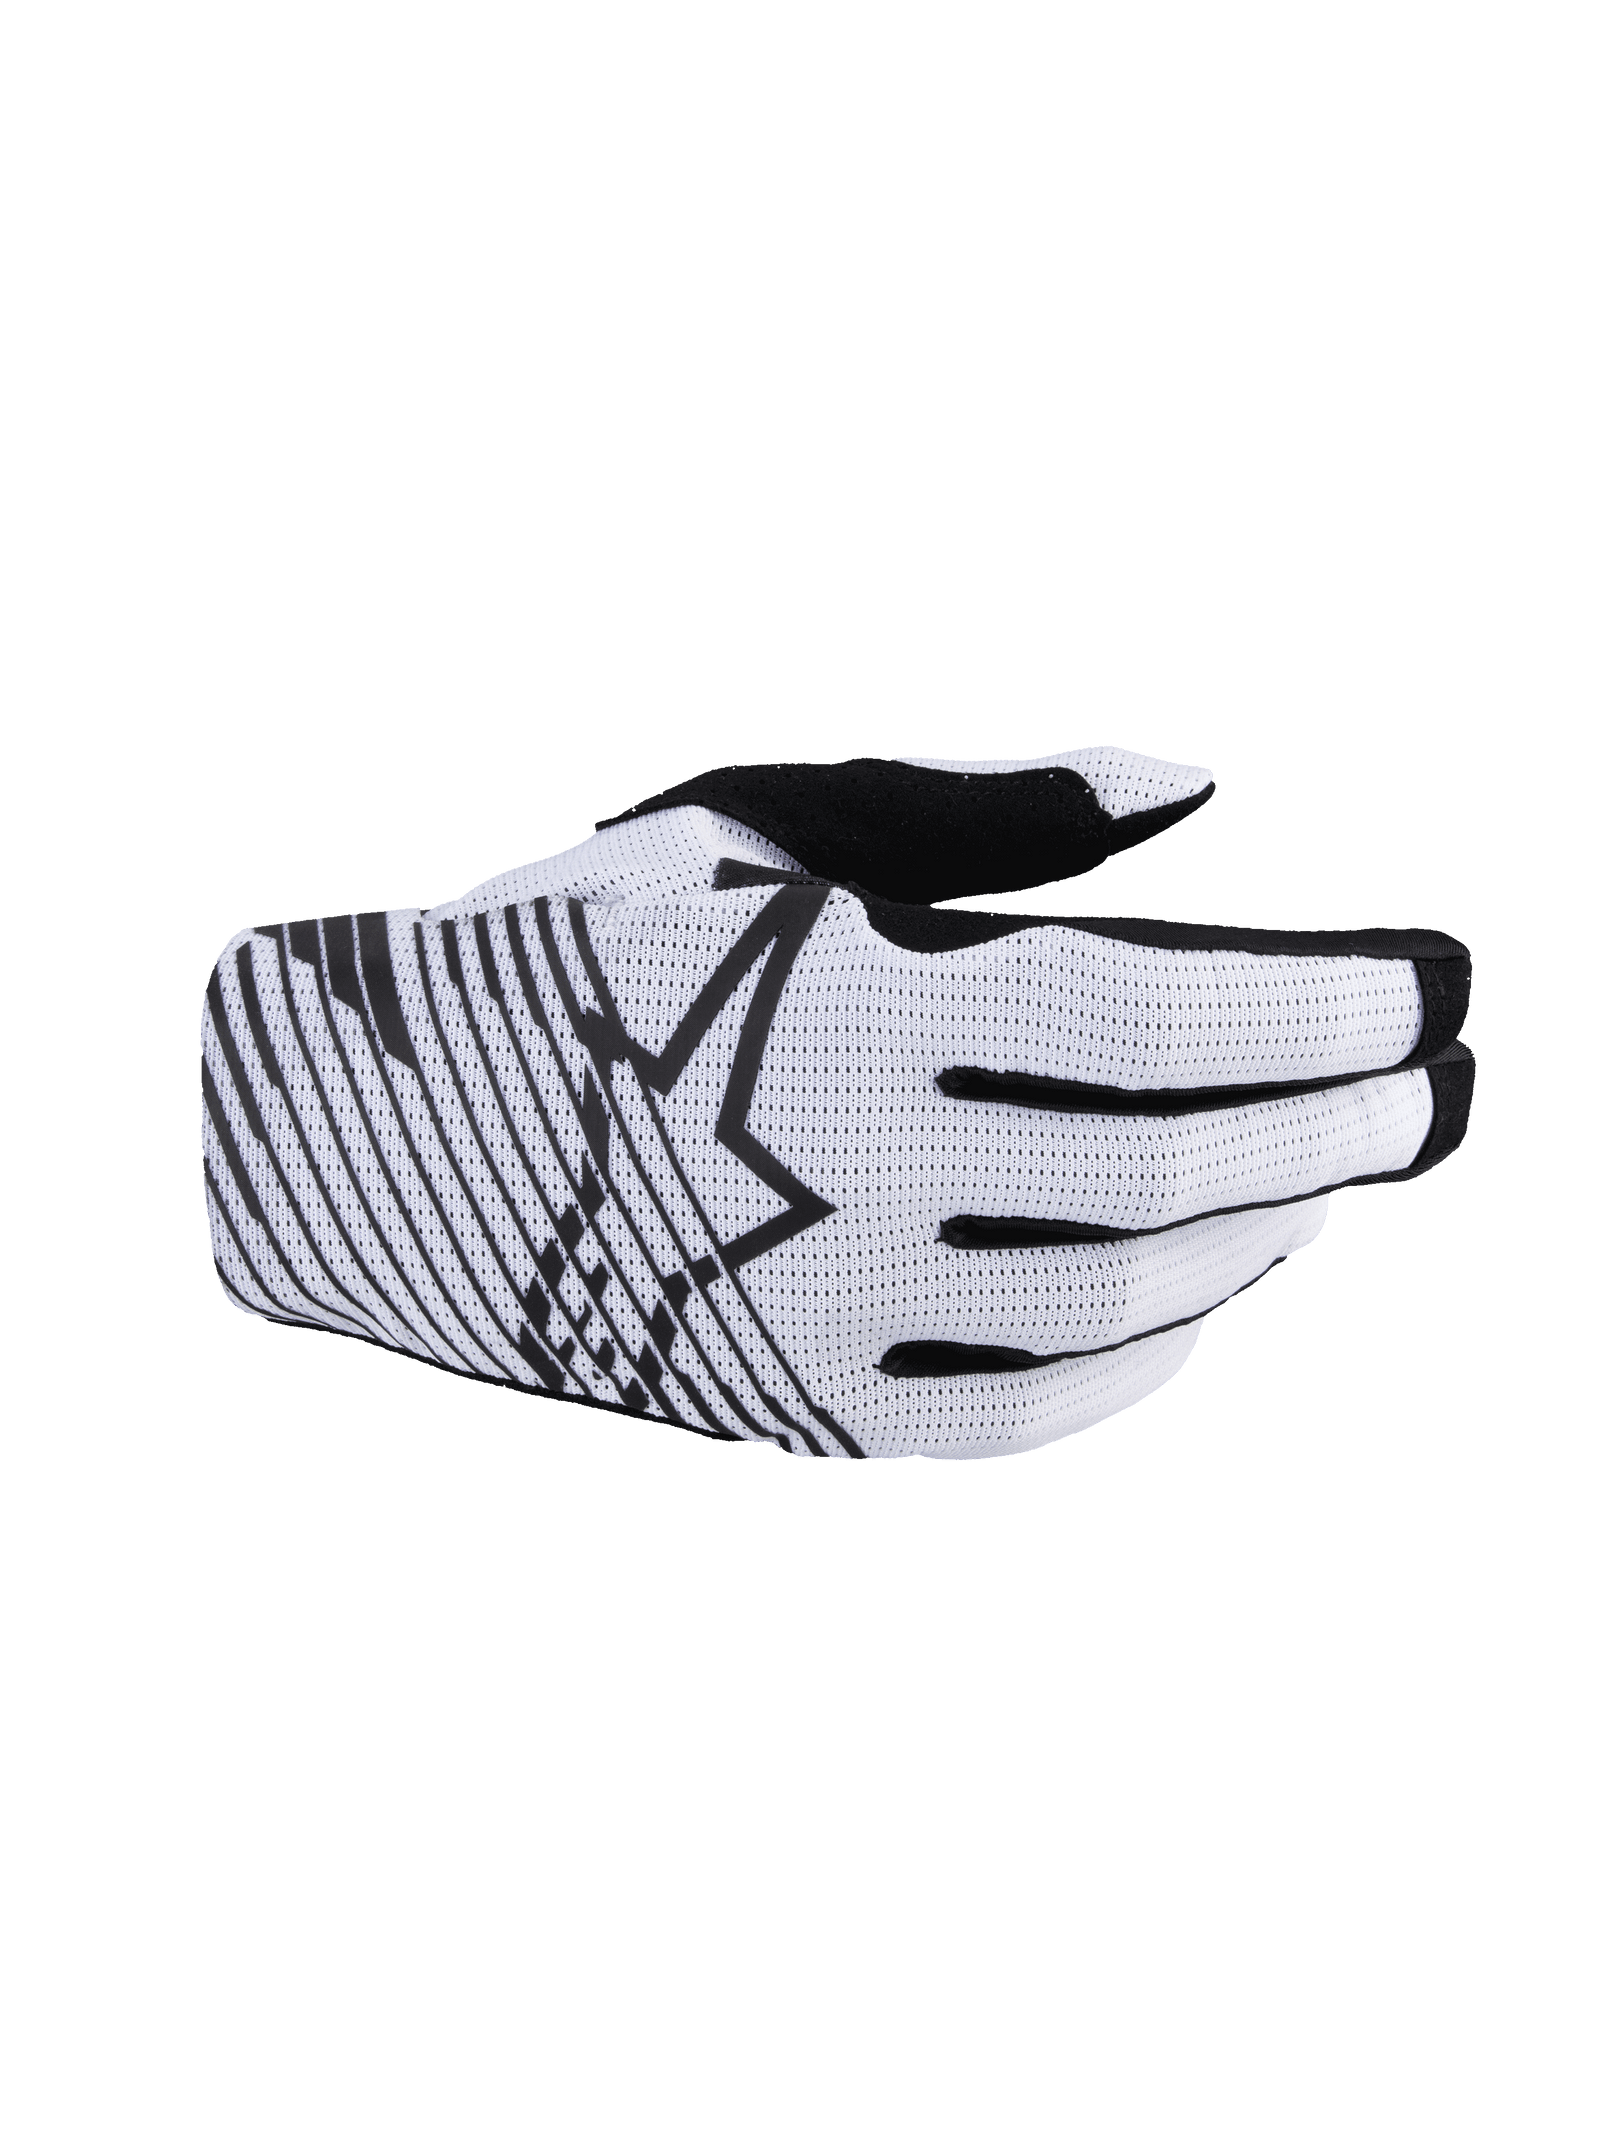 Radar Pro Gloves